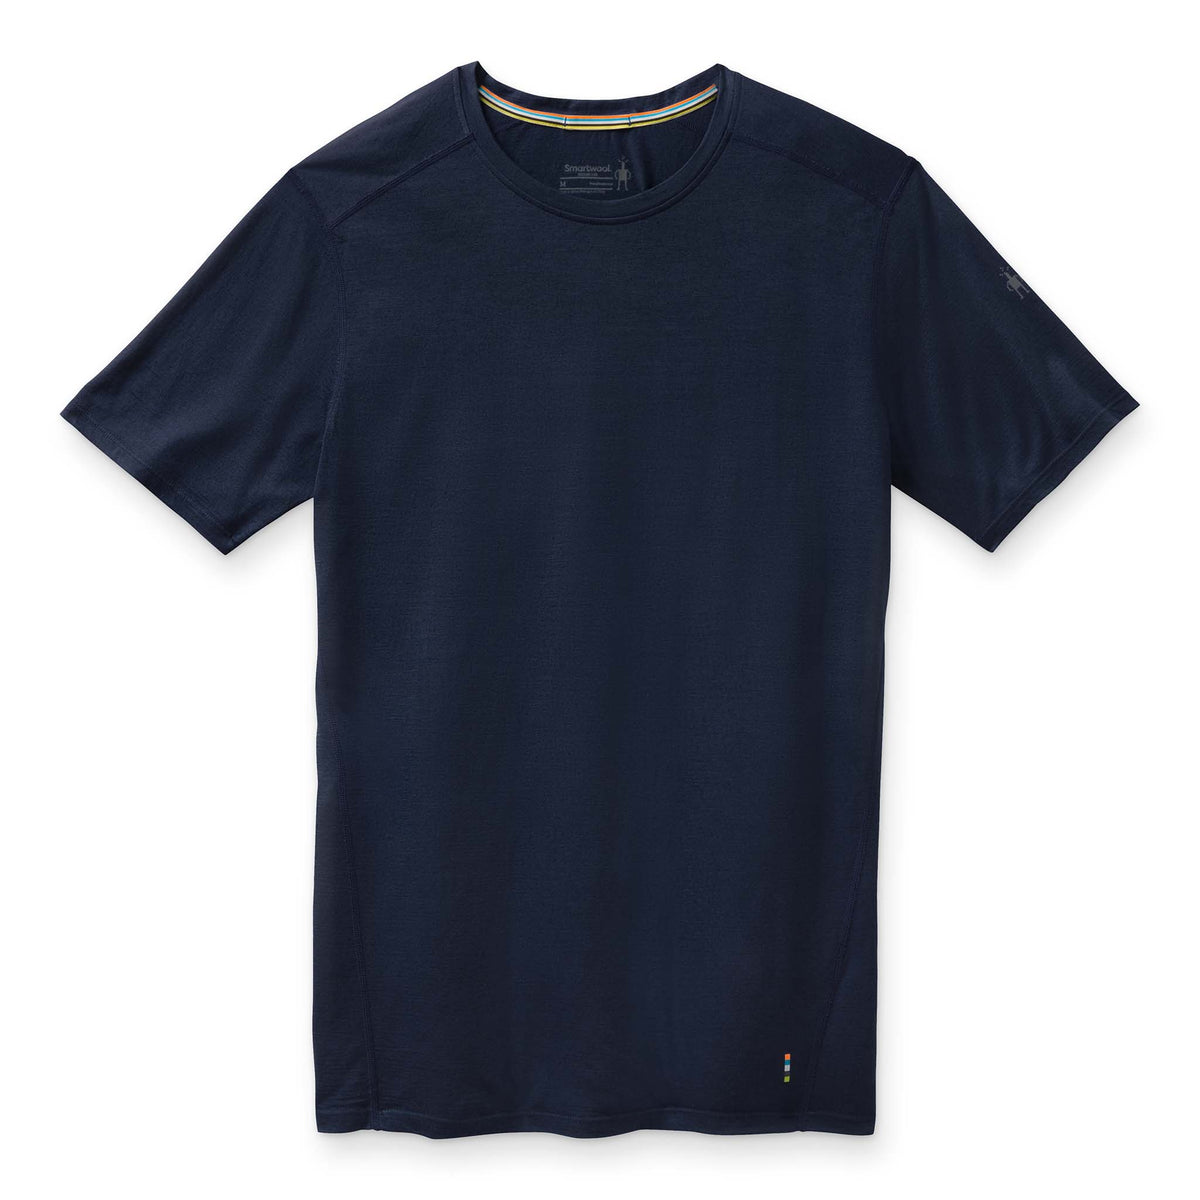 Smartwool Merino 150 Baselayer t-shirt à manches courtes indigo blue homme